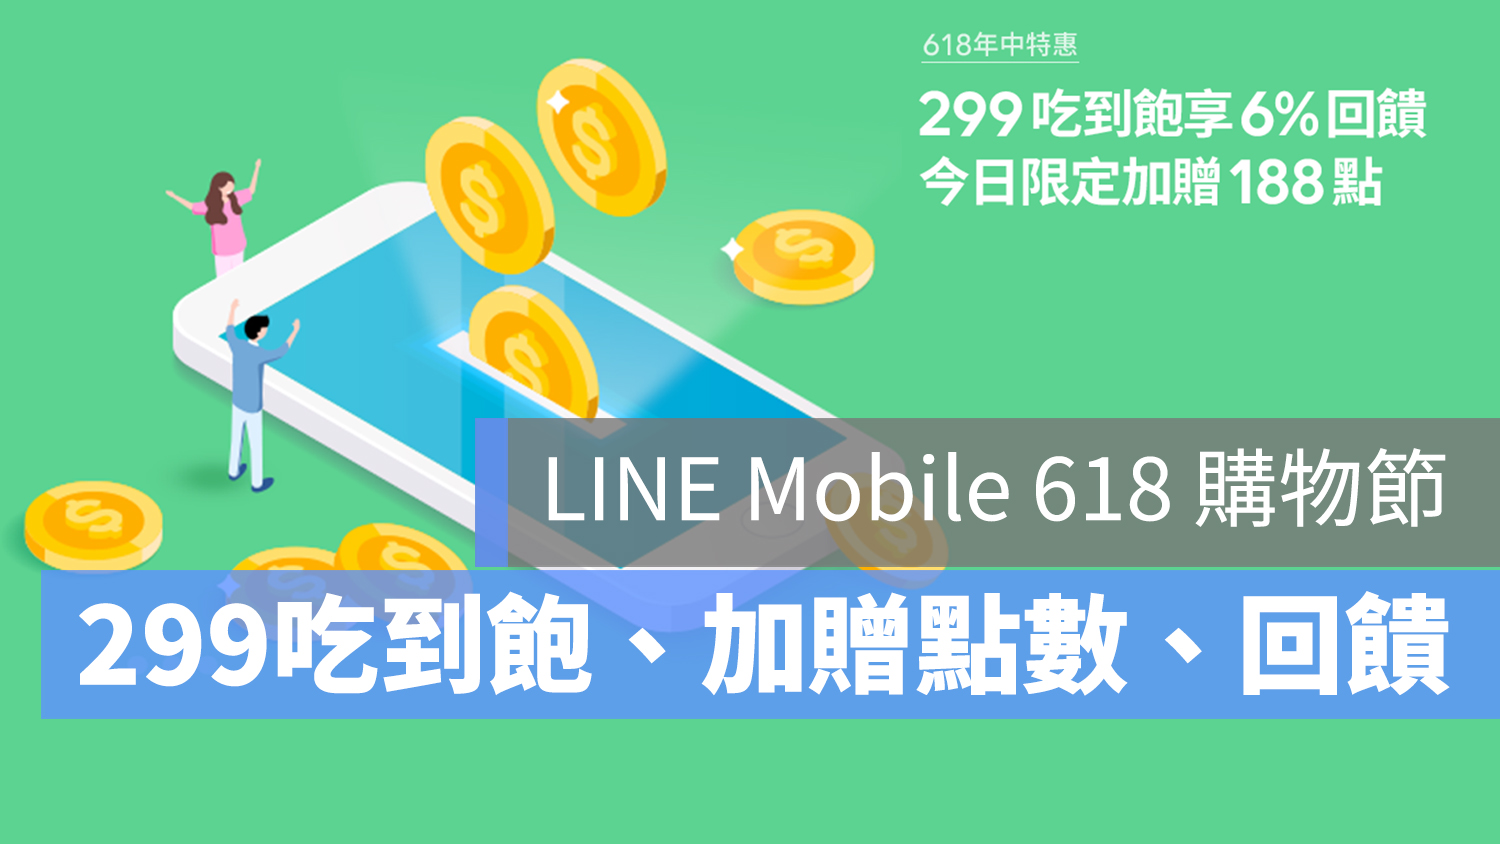 LINE Mobile 618 購物節